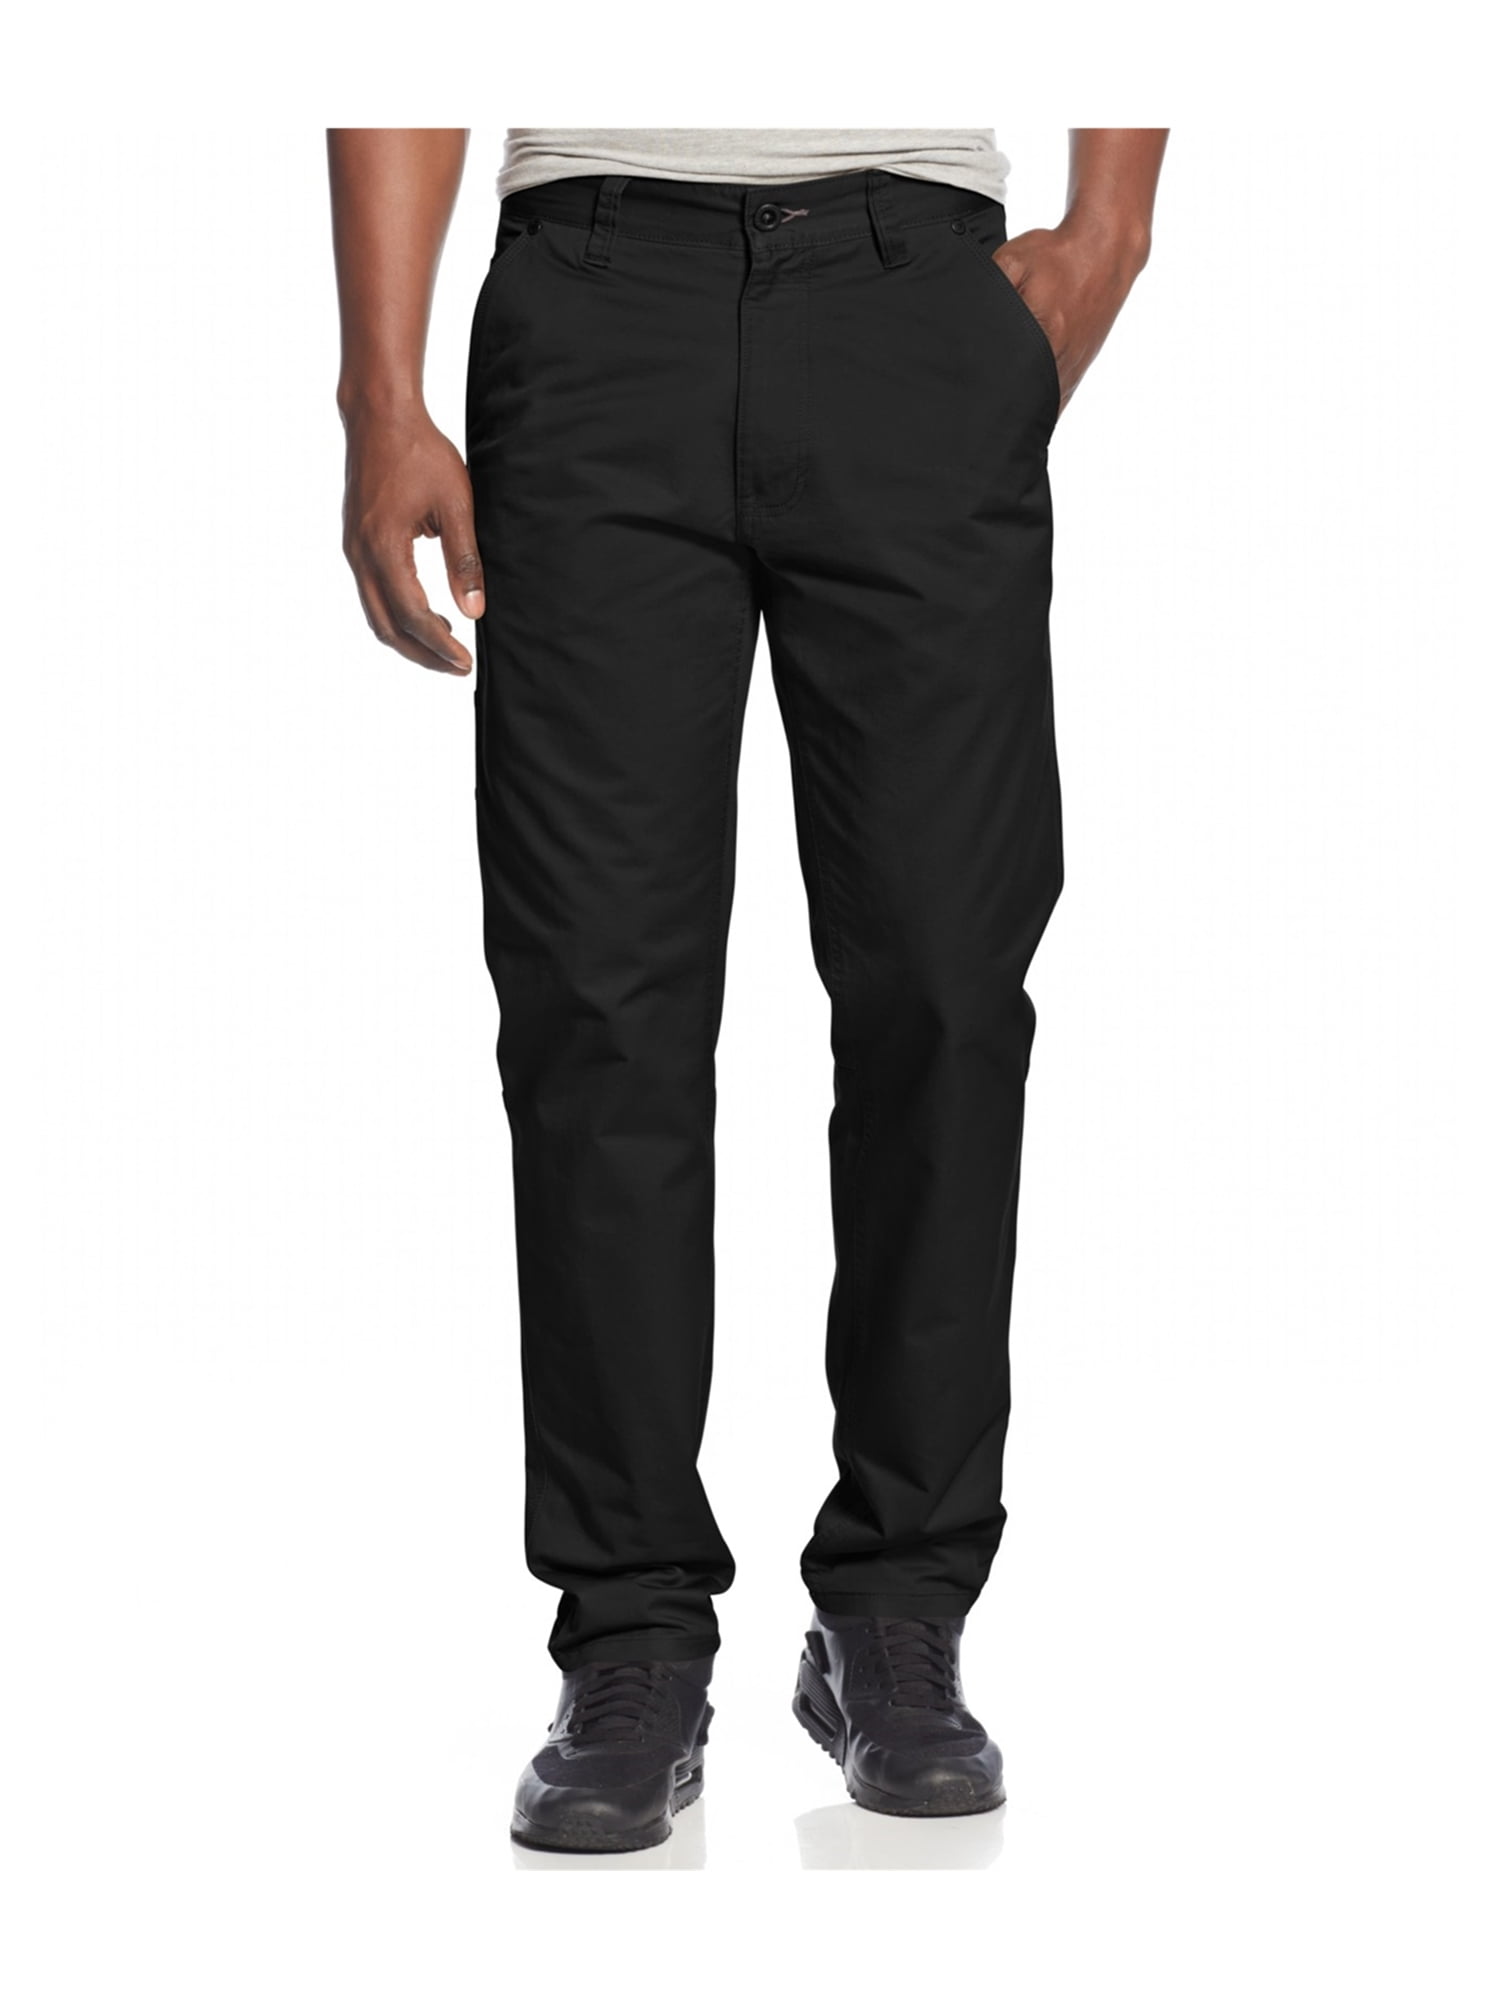 Sean John Mens Solid Casual Carpenter Pants black 36x31 | Walmart Canada